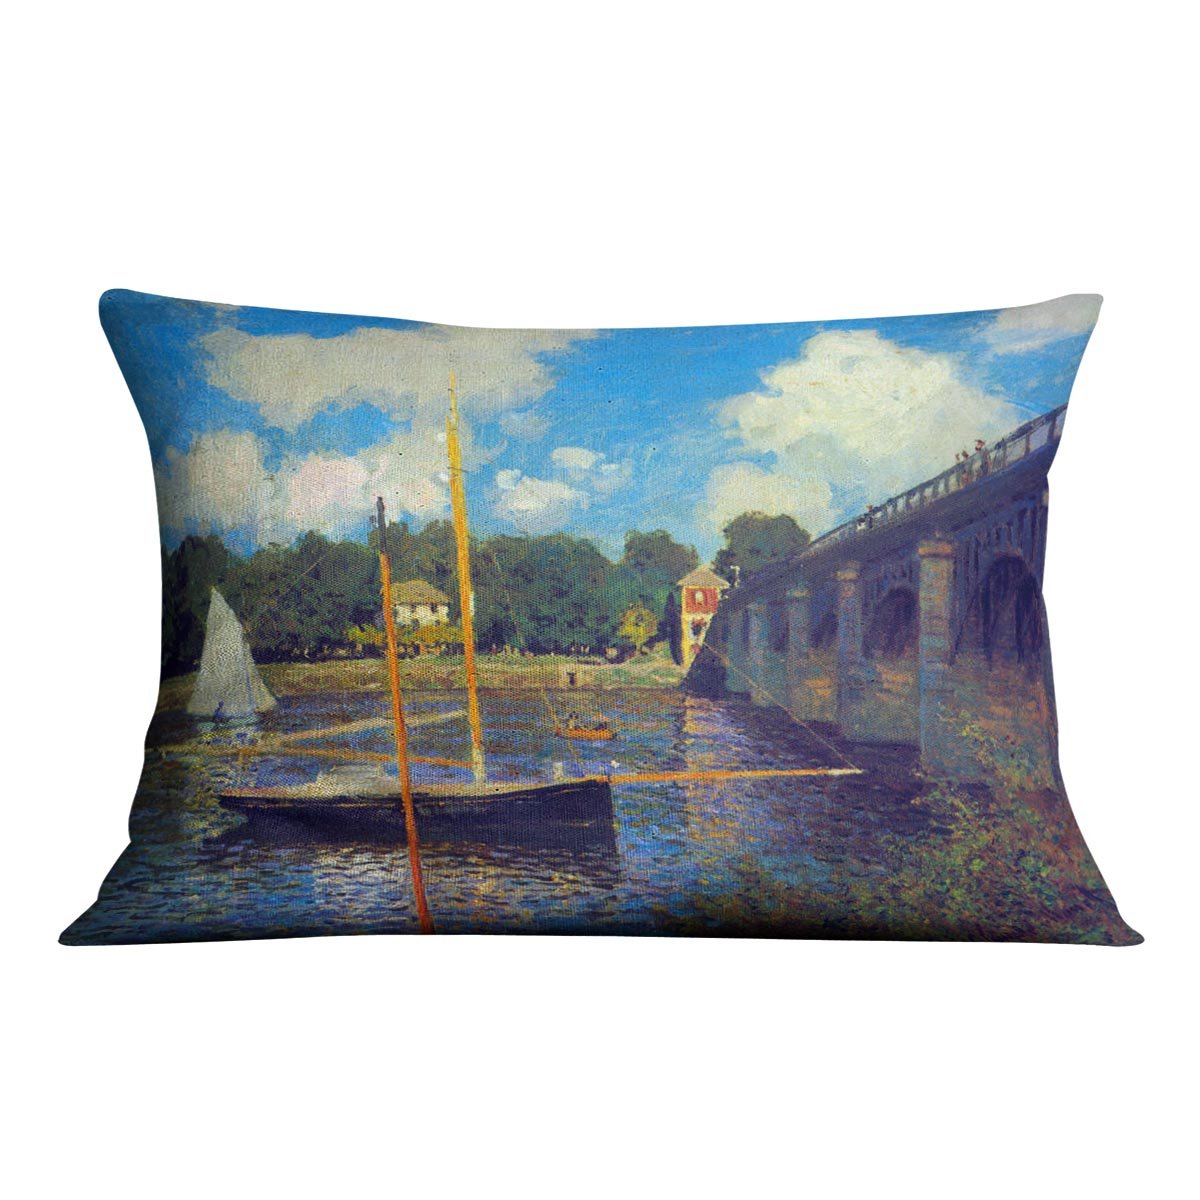 The road bridge Argenteuil by Monet Throw Pillow